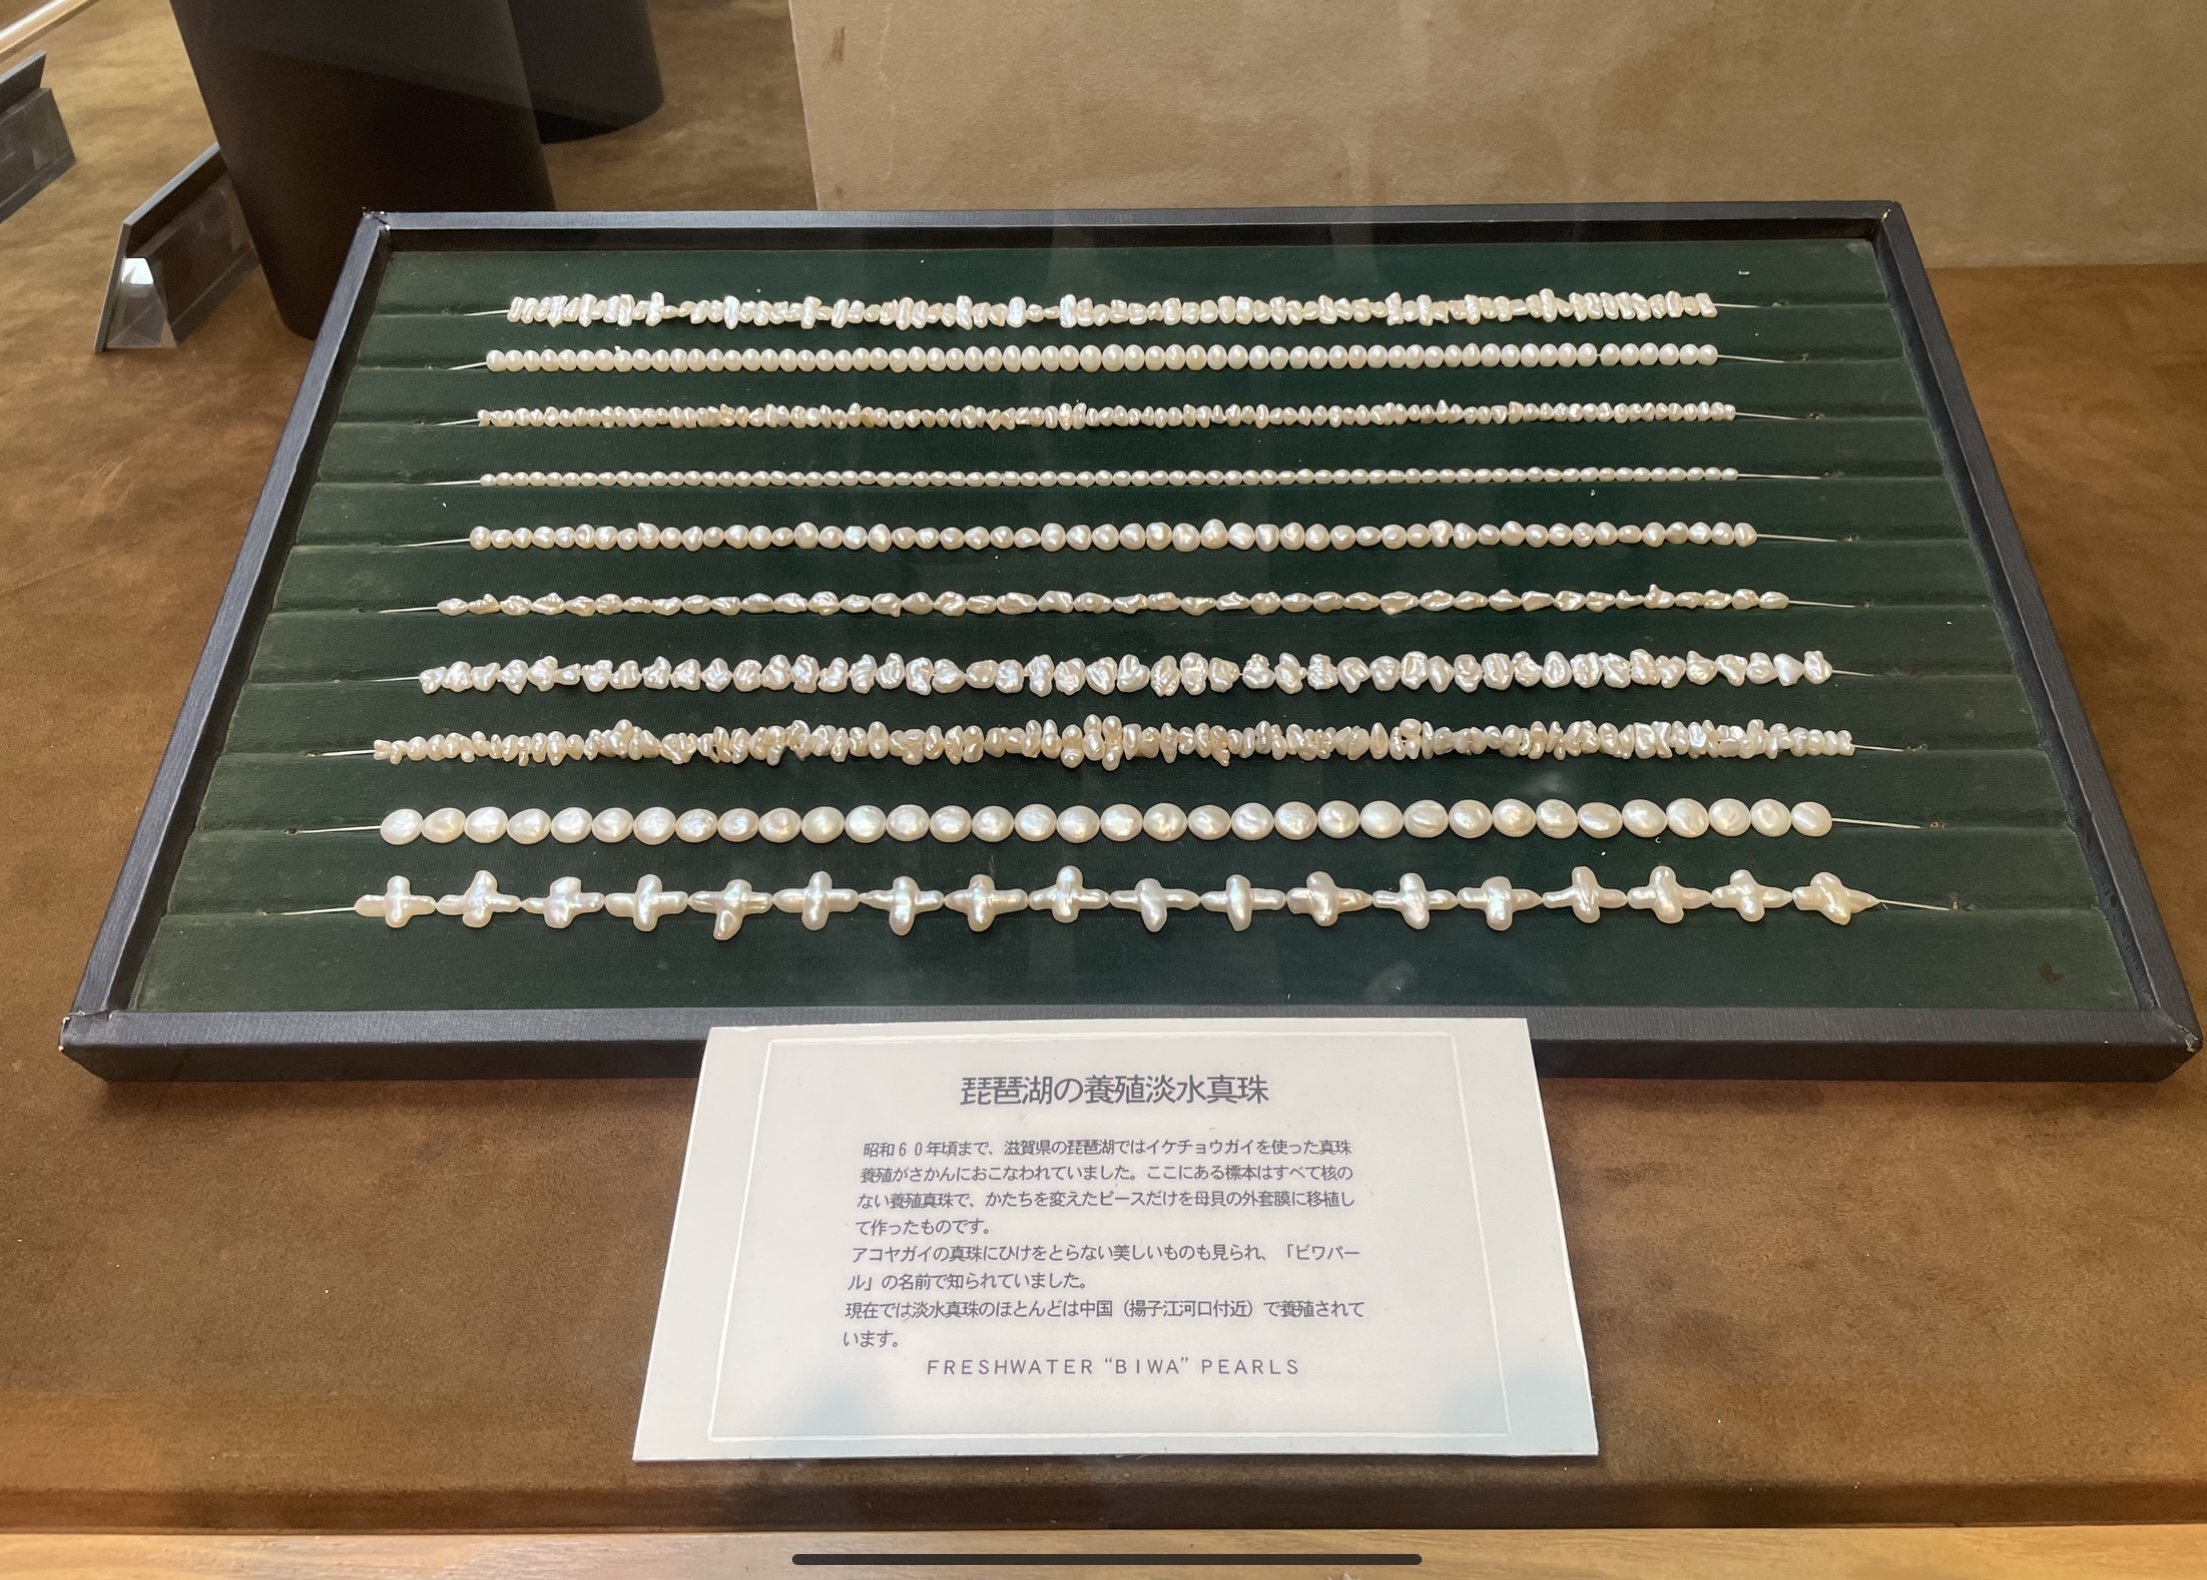 Freshwater Biwa pearls - Mikimoto Pearl Museum